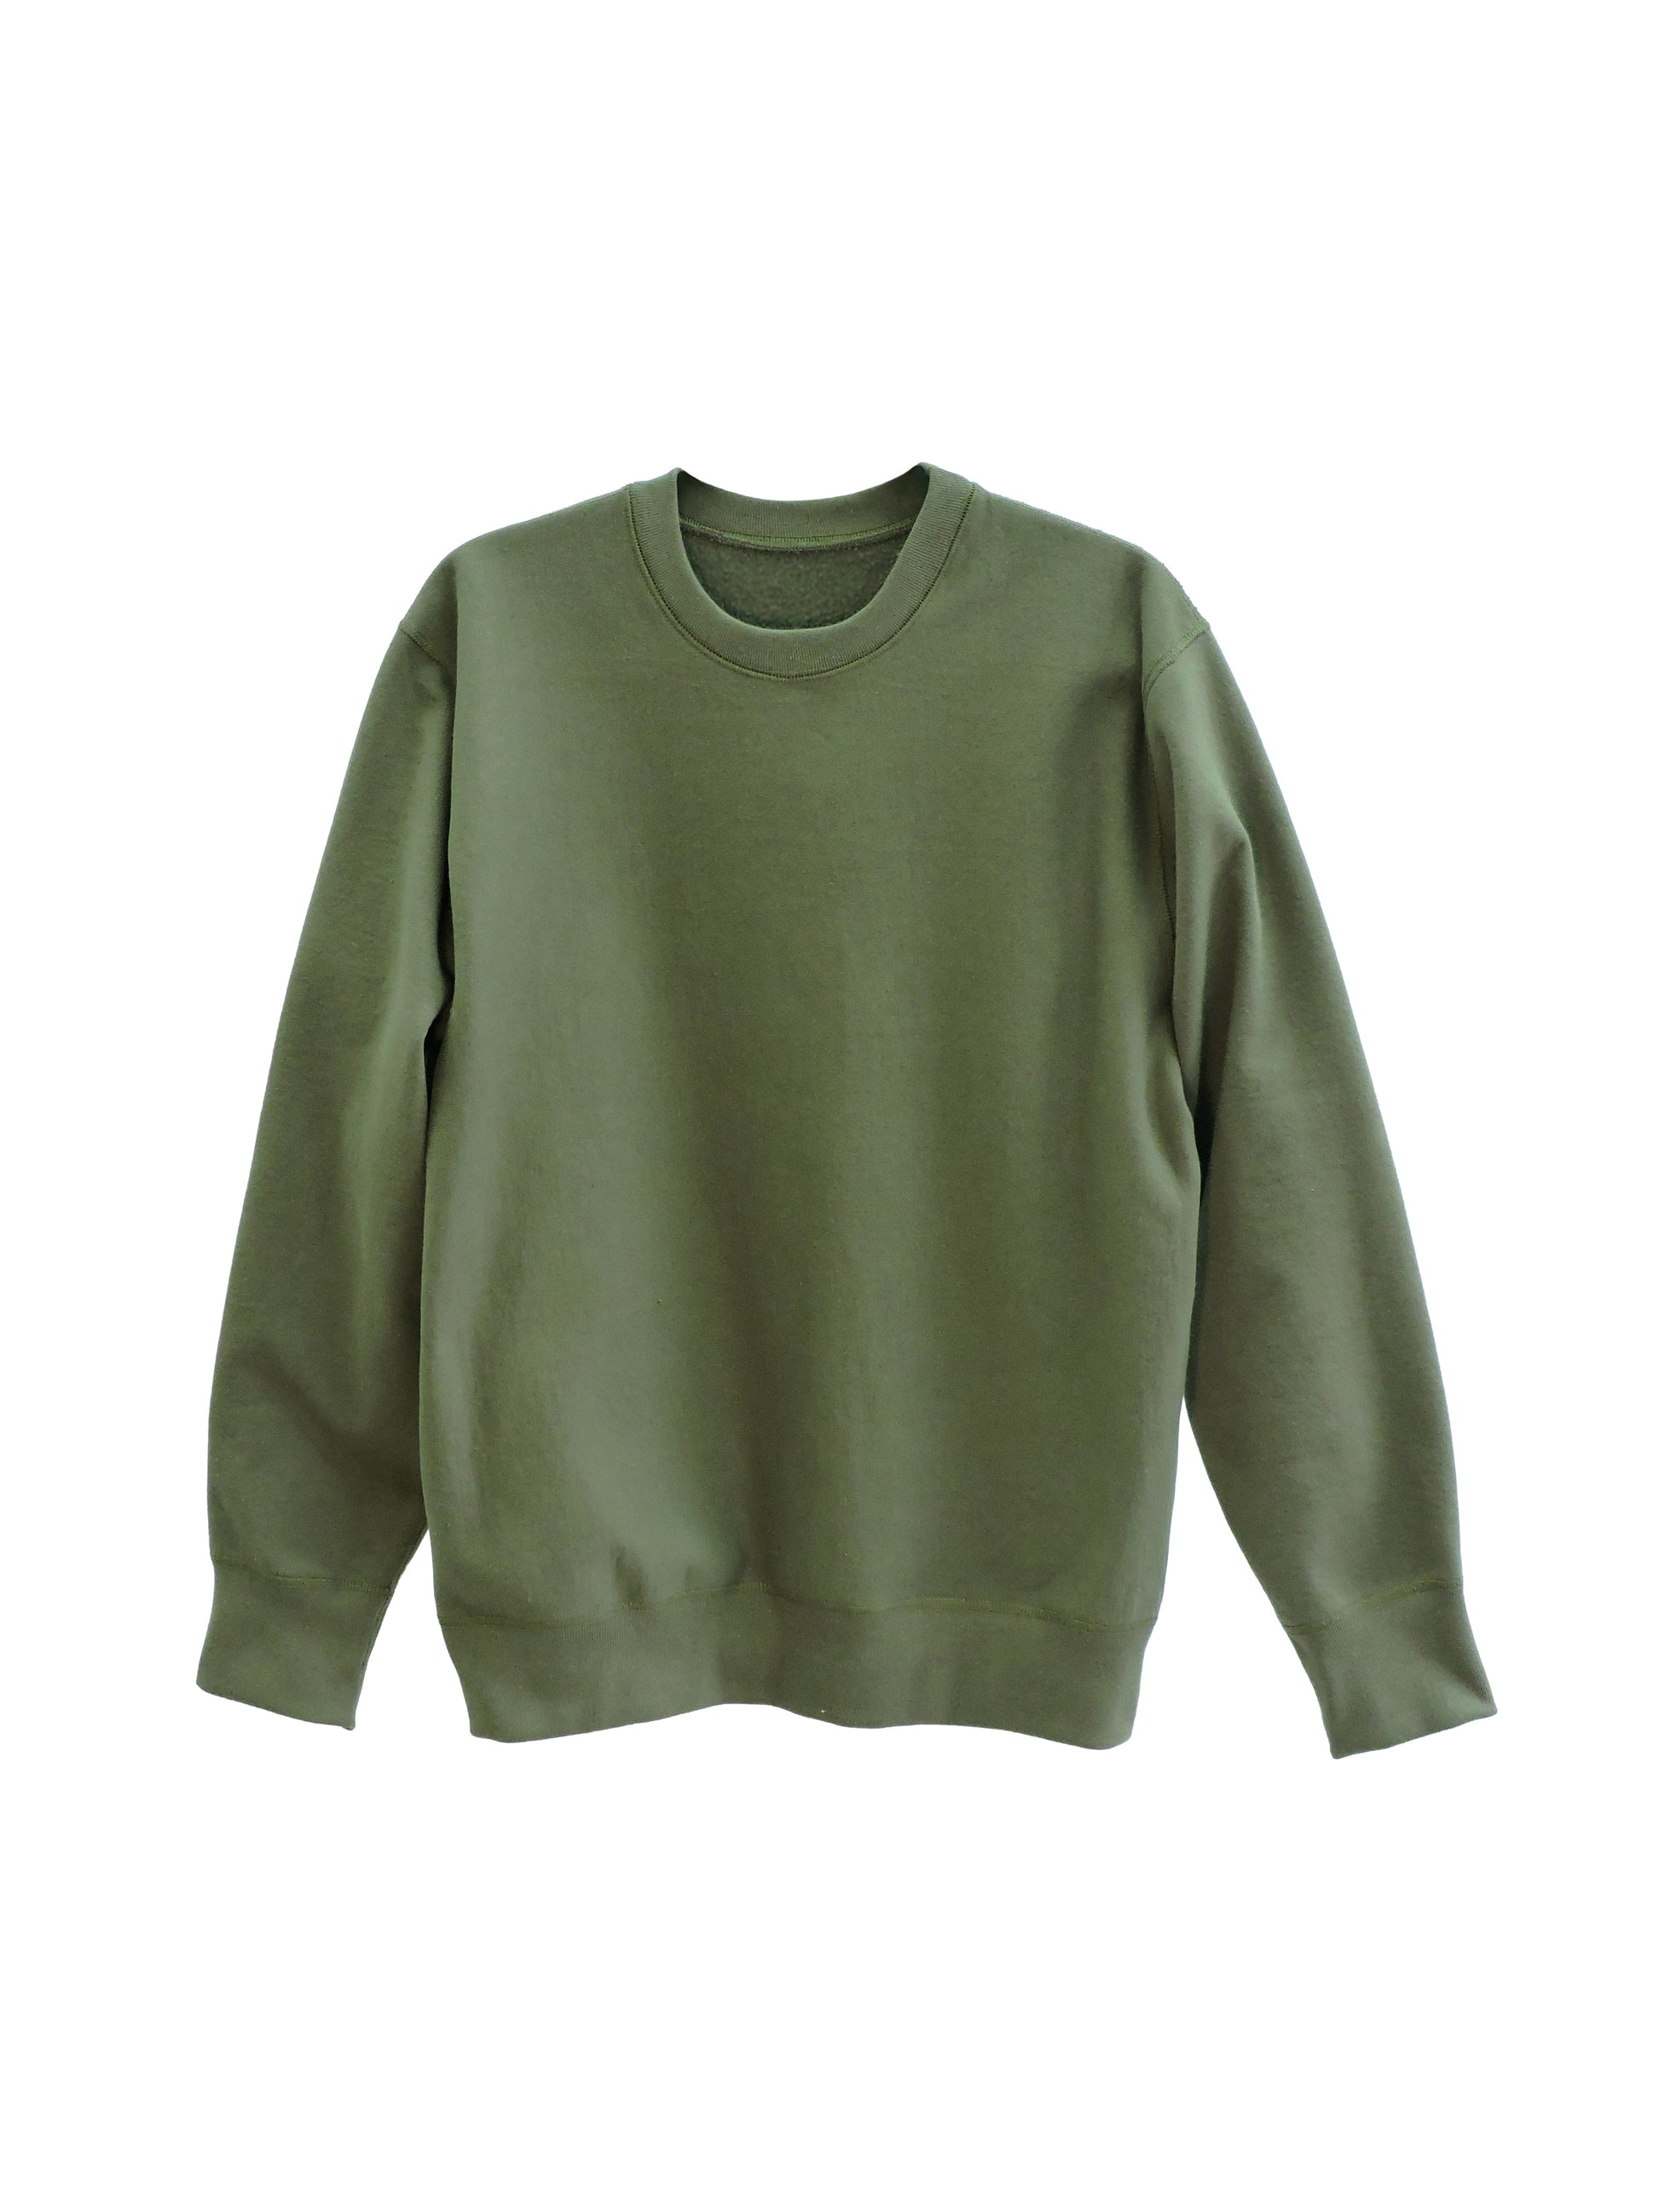 Olive Green Crewneck Sweater, 450 GSM Organic Cotton